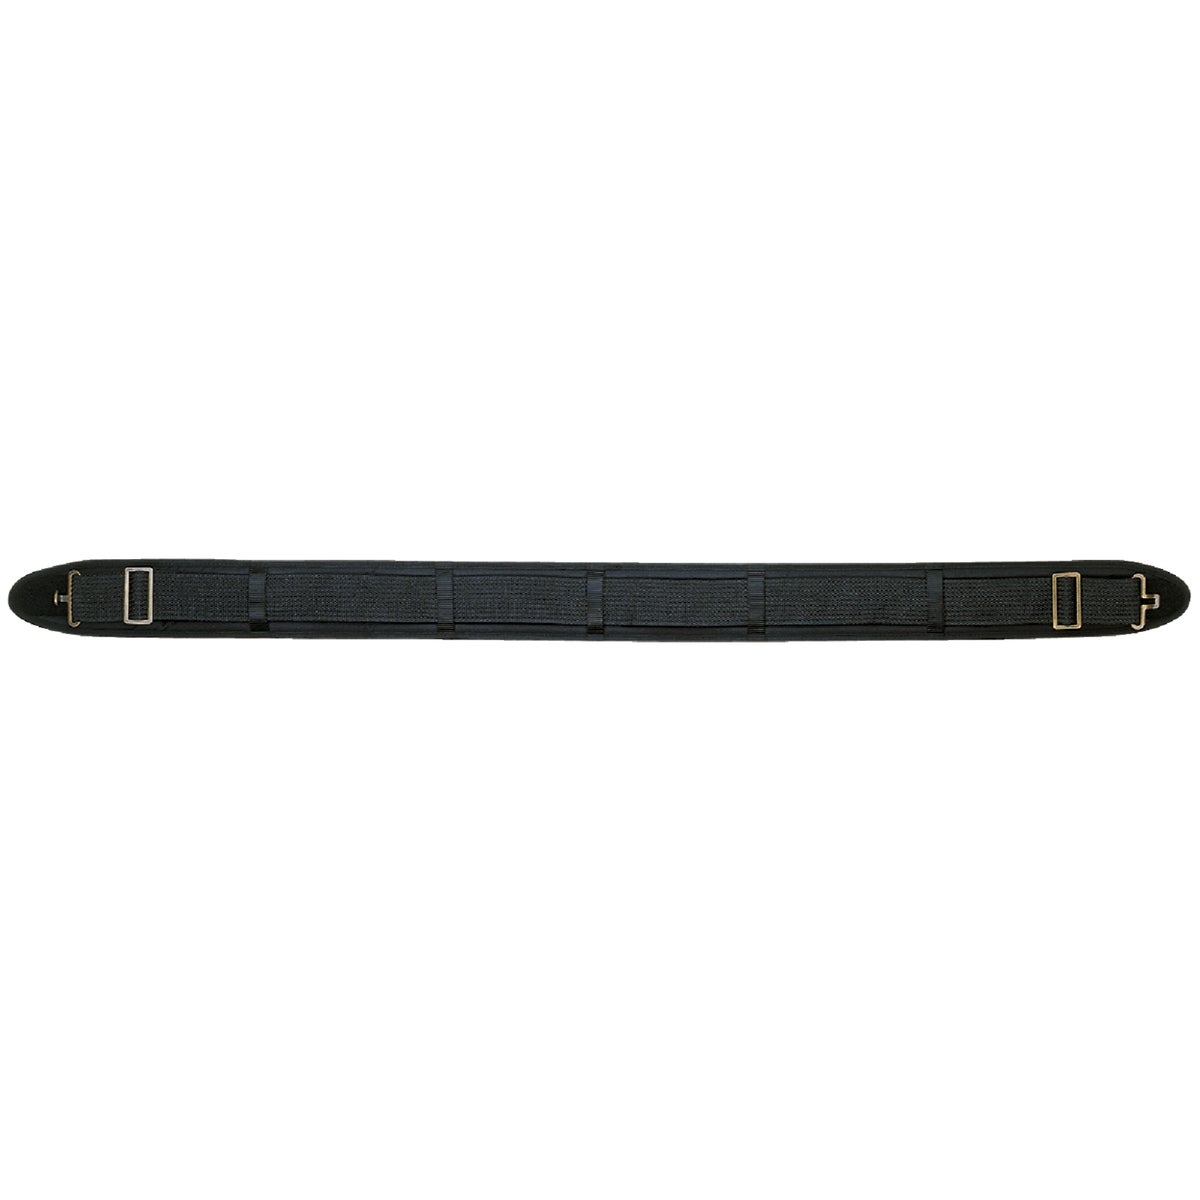 Item 332682, Three inch wide padded comfort belt.